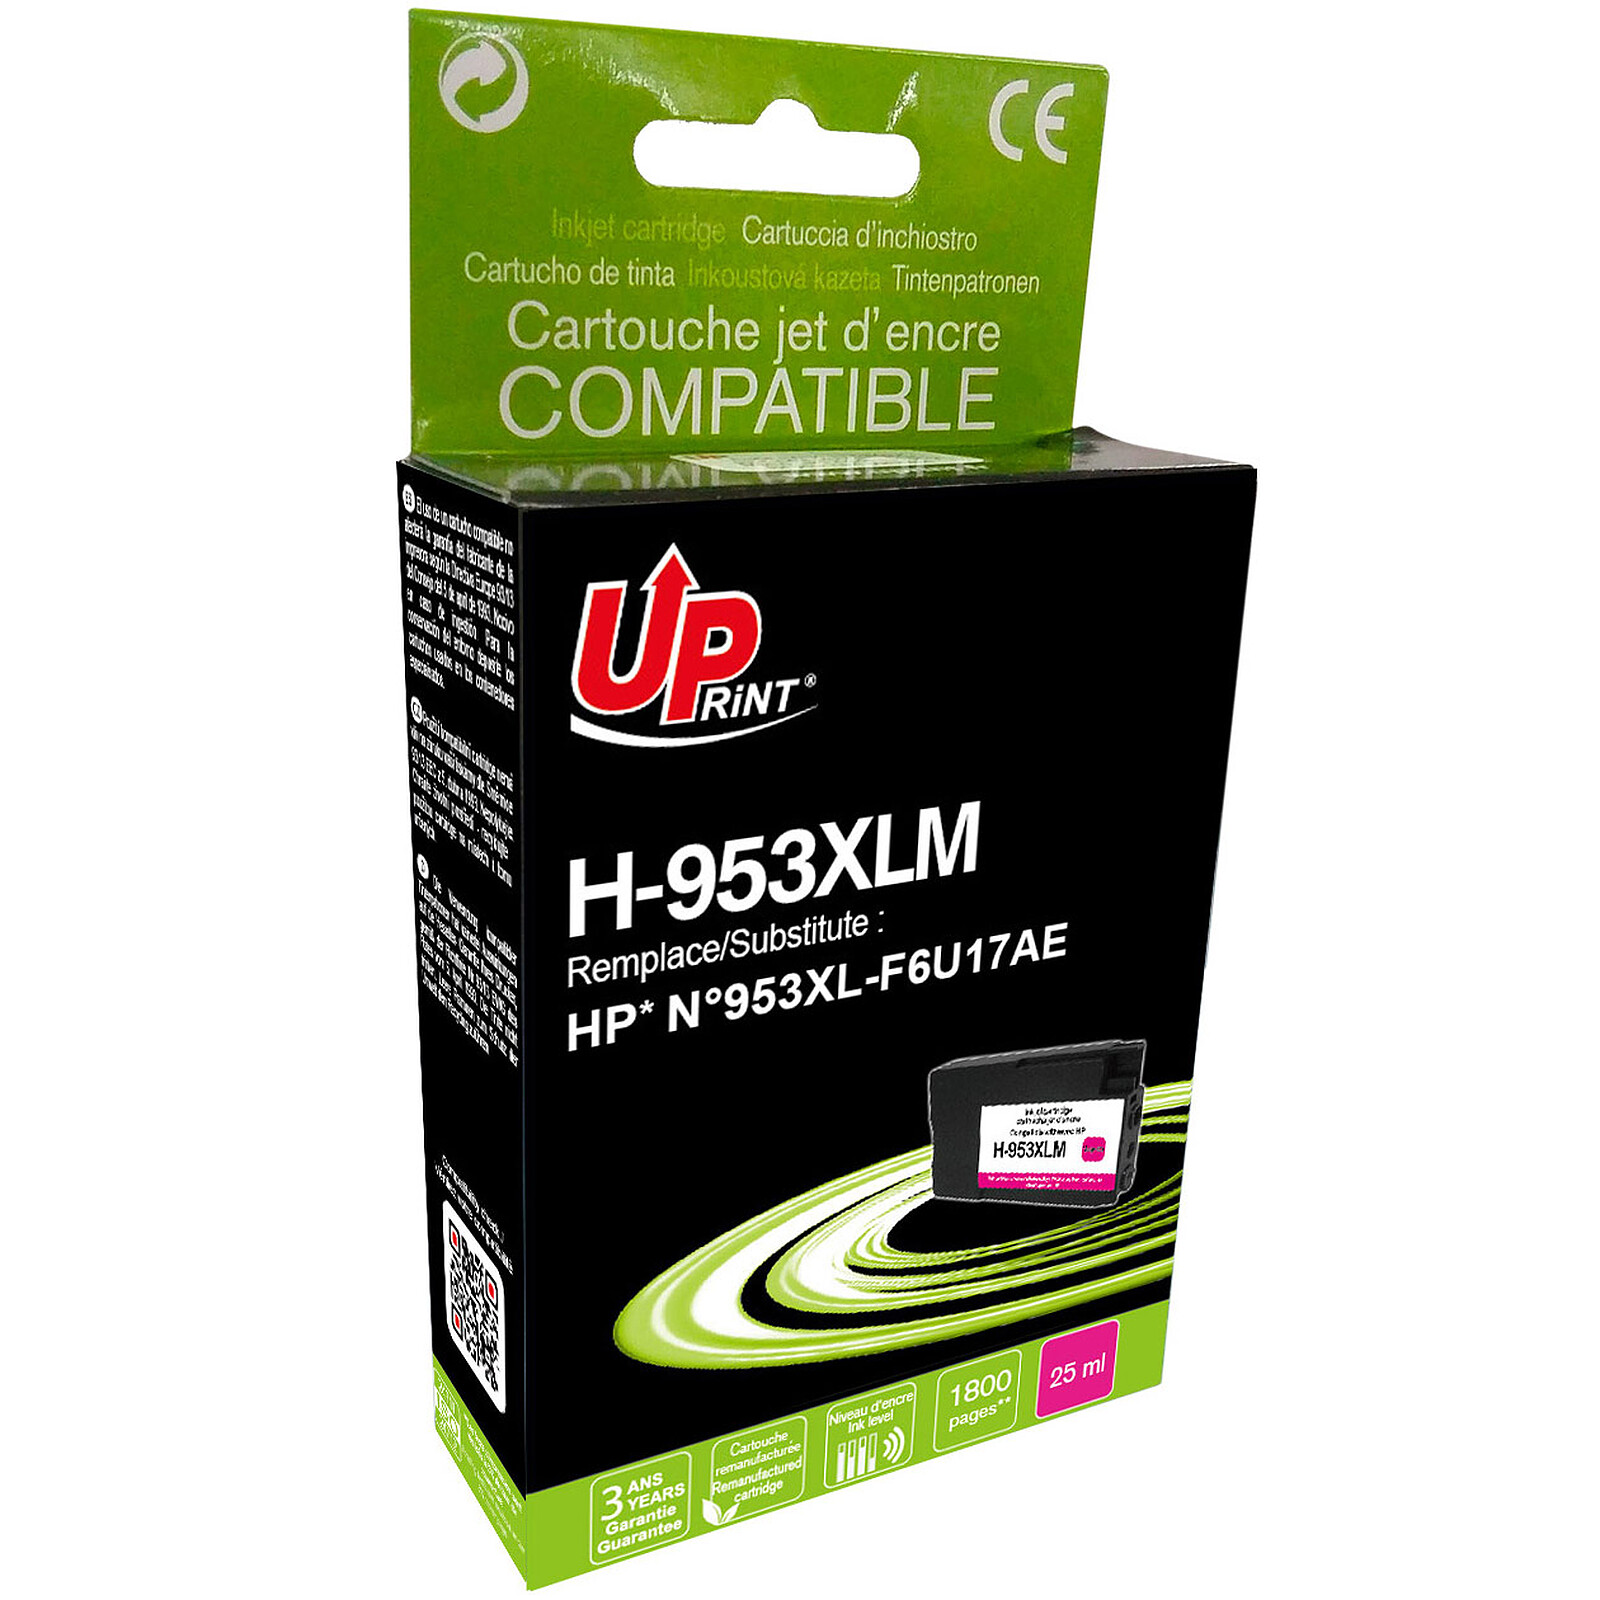 cartridge Printer UPrint - Magenta H-953XL Holy - LDLC Moley |